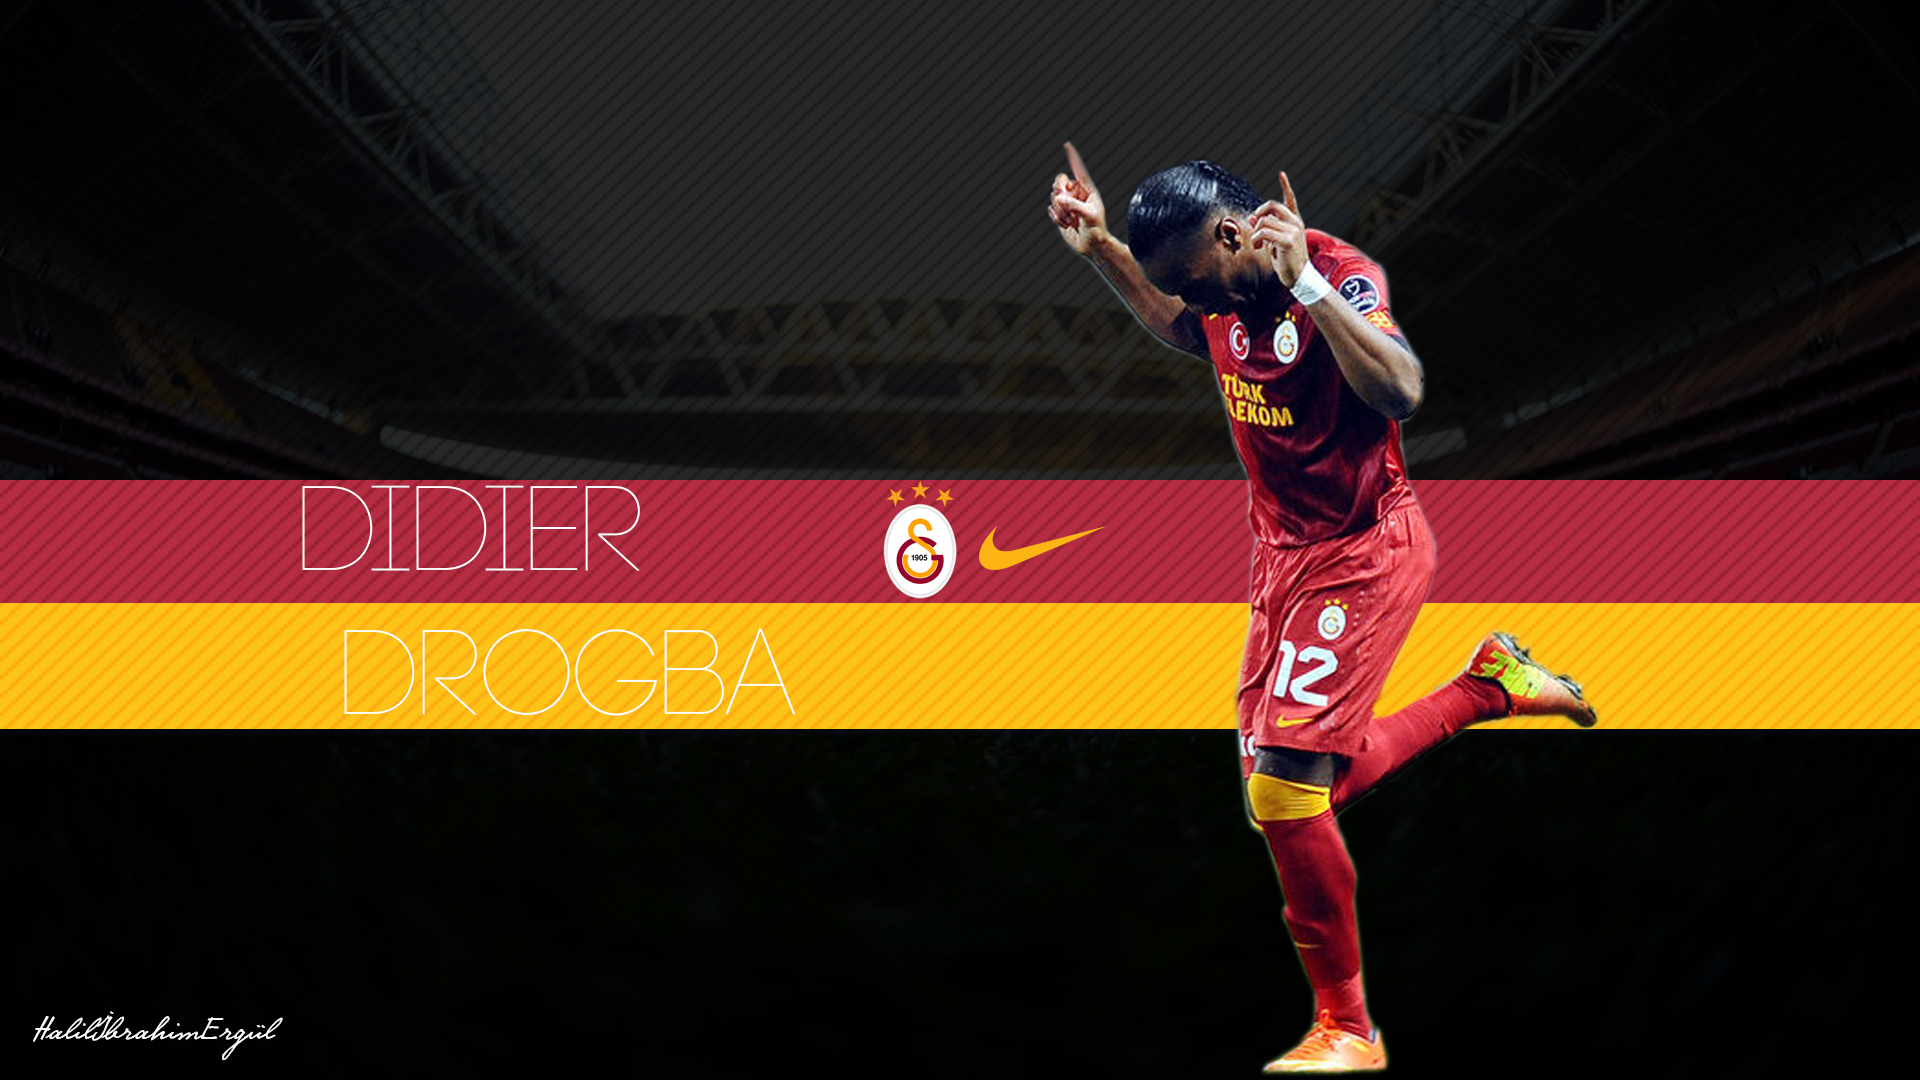 Galatasaray Didier Drogba on dark background Desktop wallpapers 1024x1024